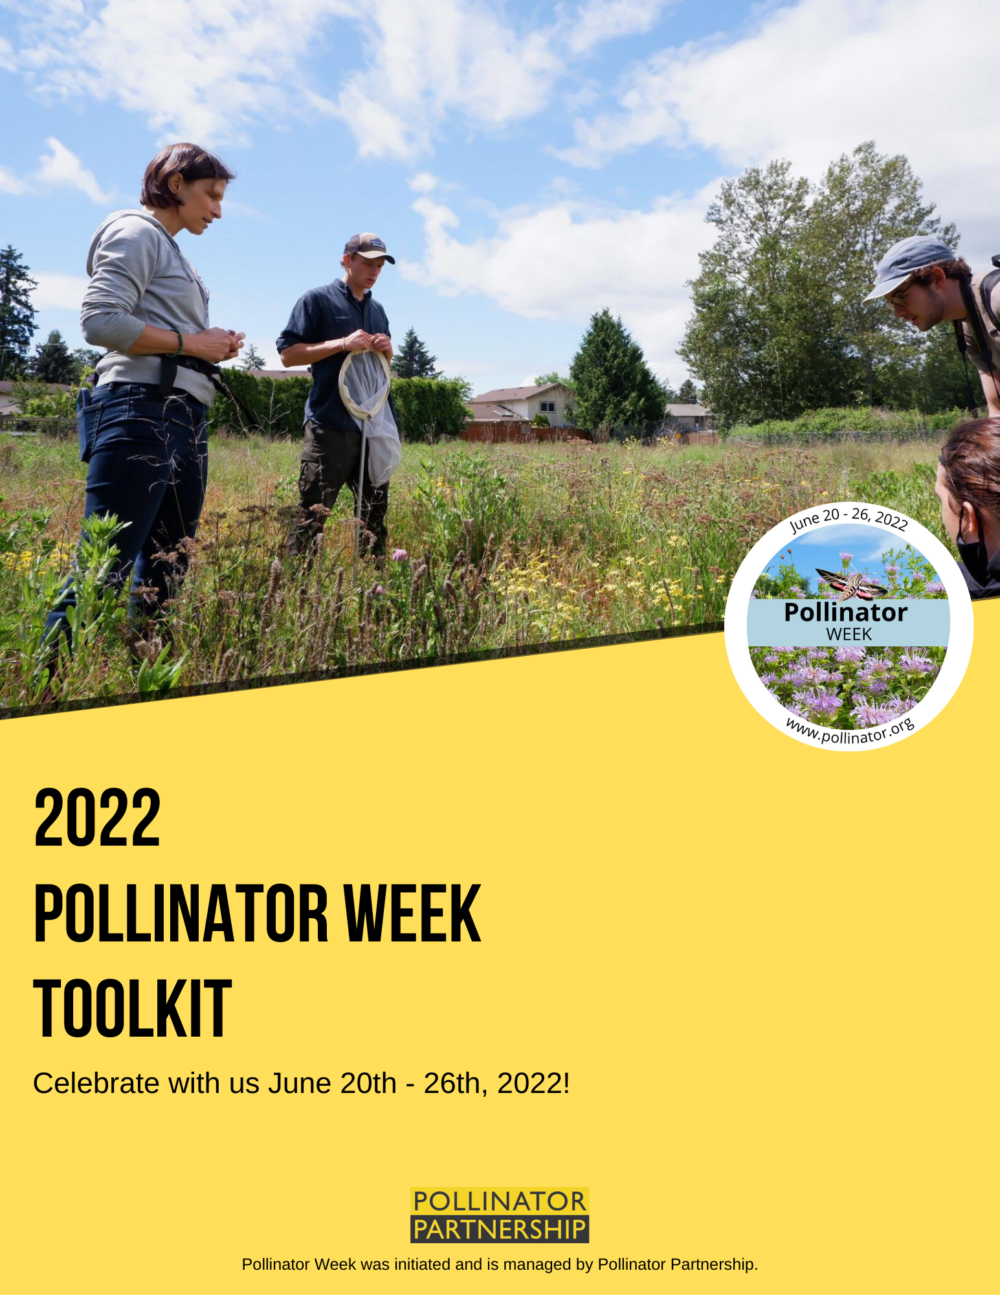 Pollinator Week Resources